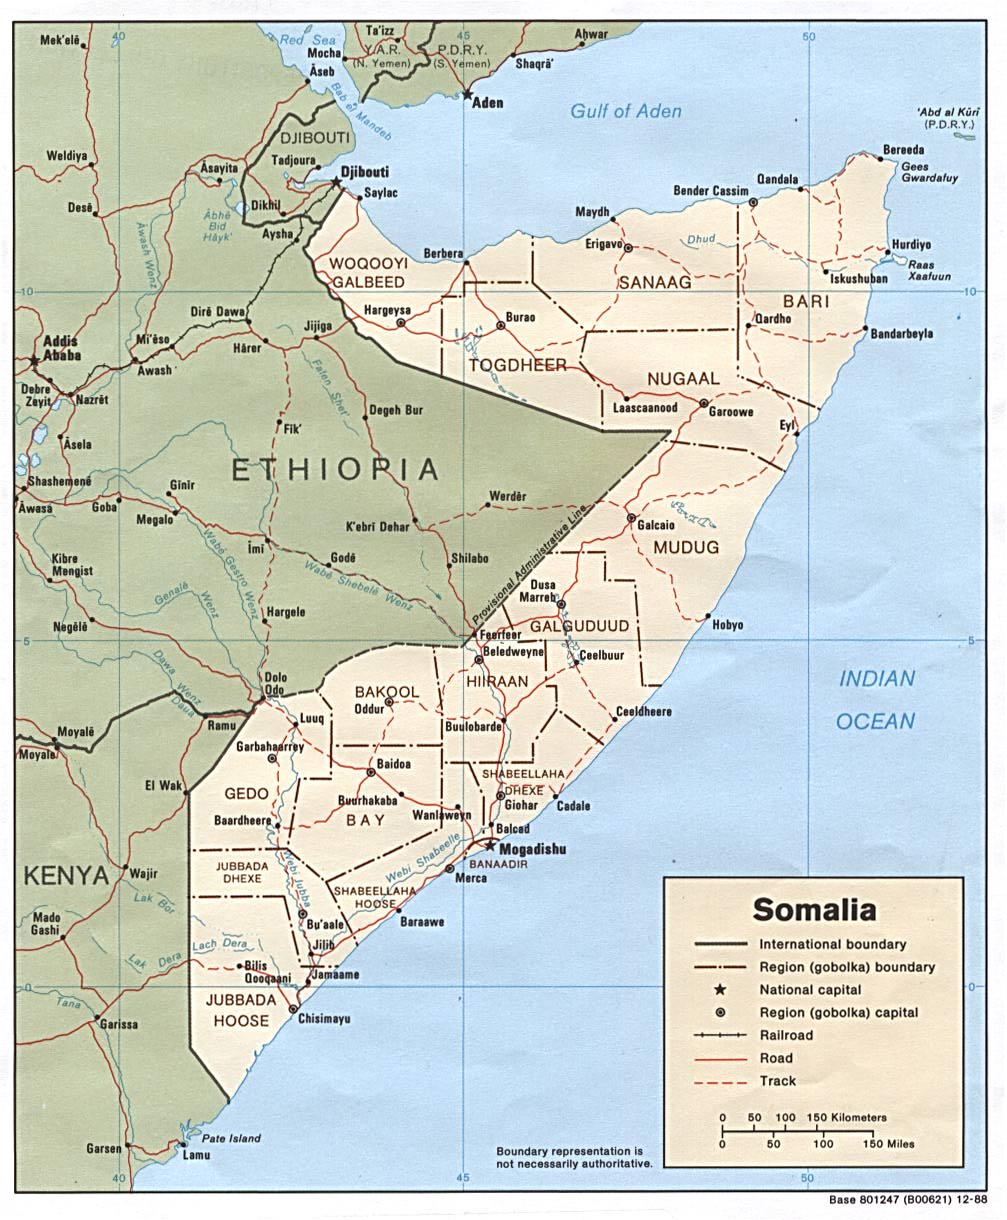 somalia_somalilandia_mapa_cc0-4.jpg